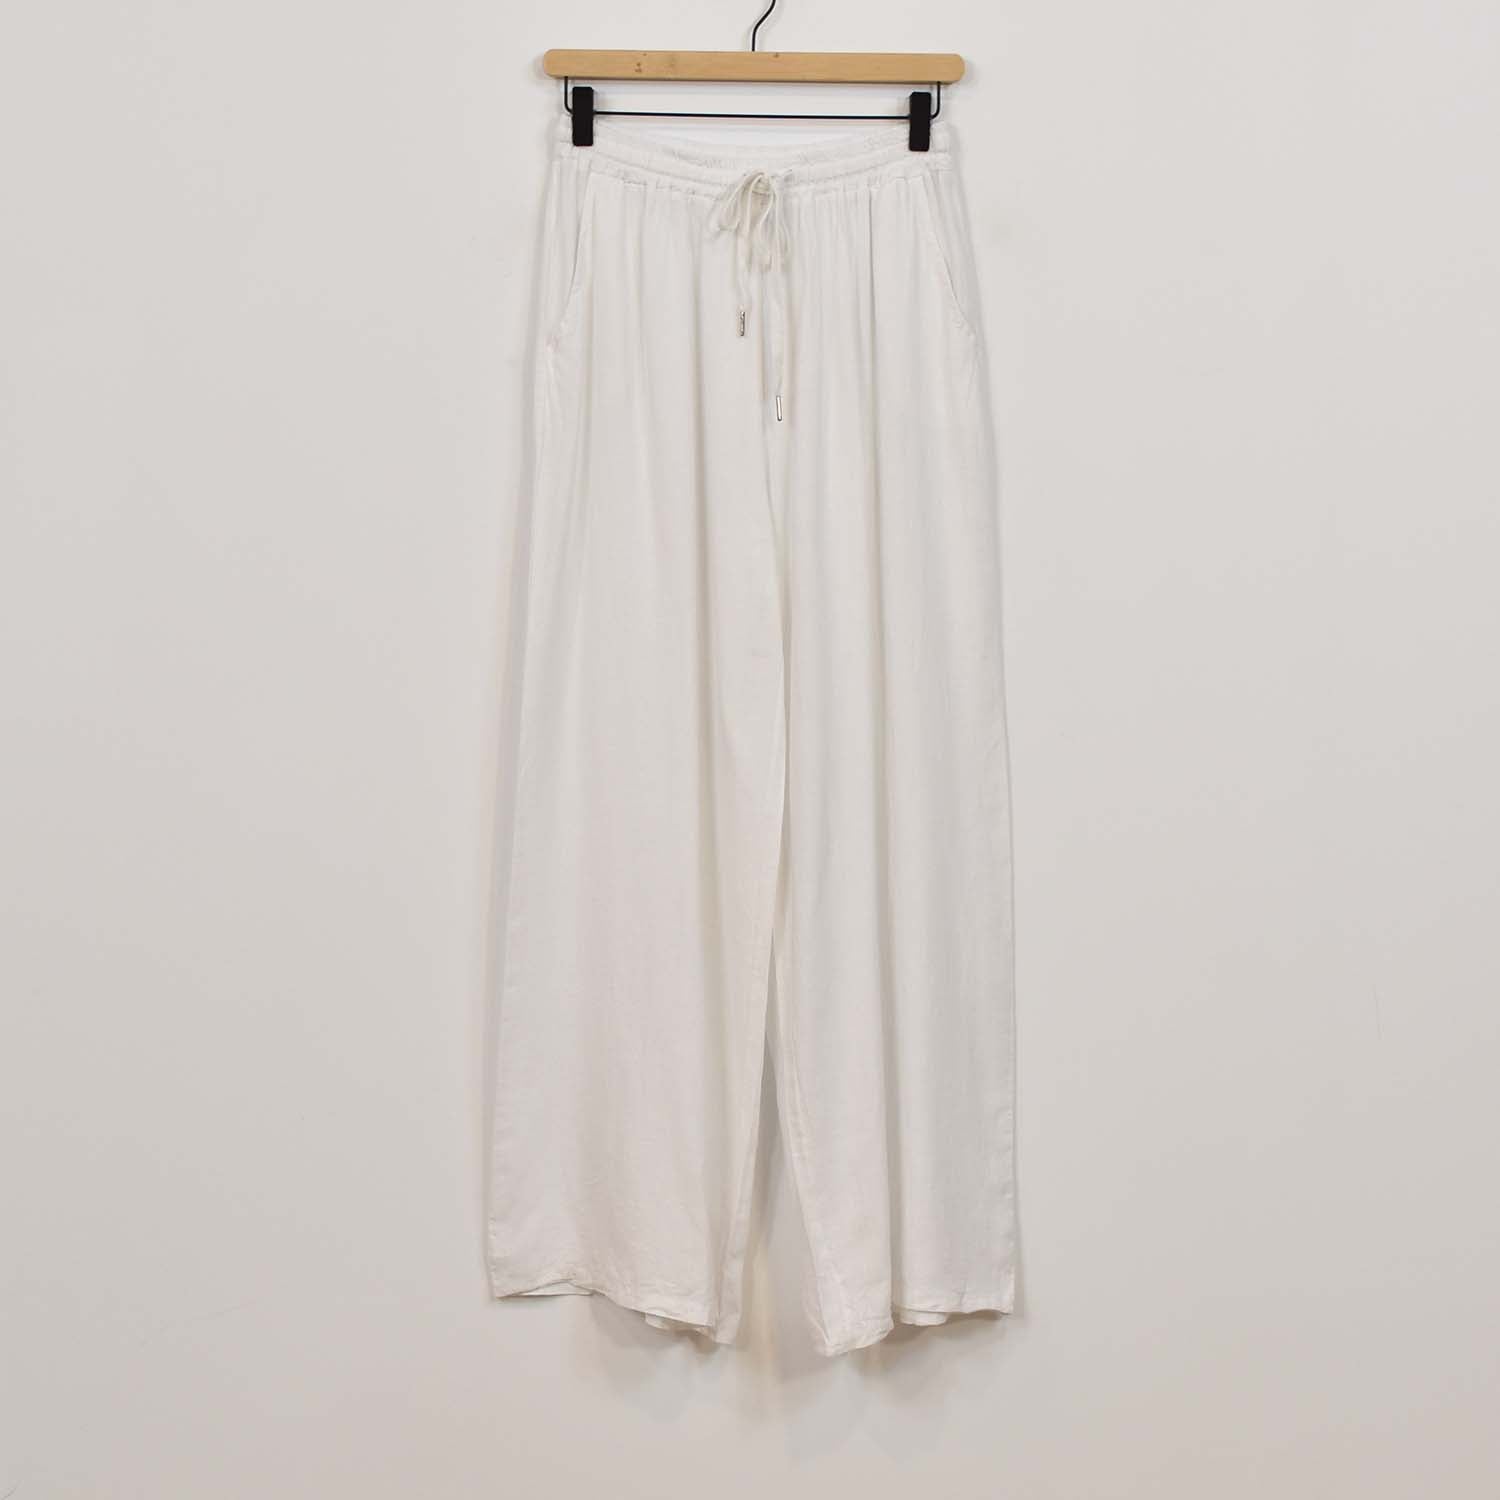 Pantalon large blanc avec poches